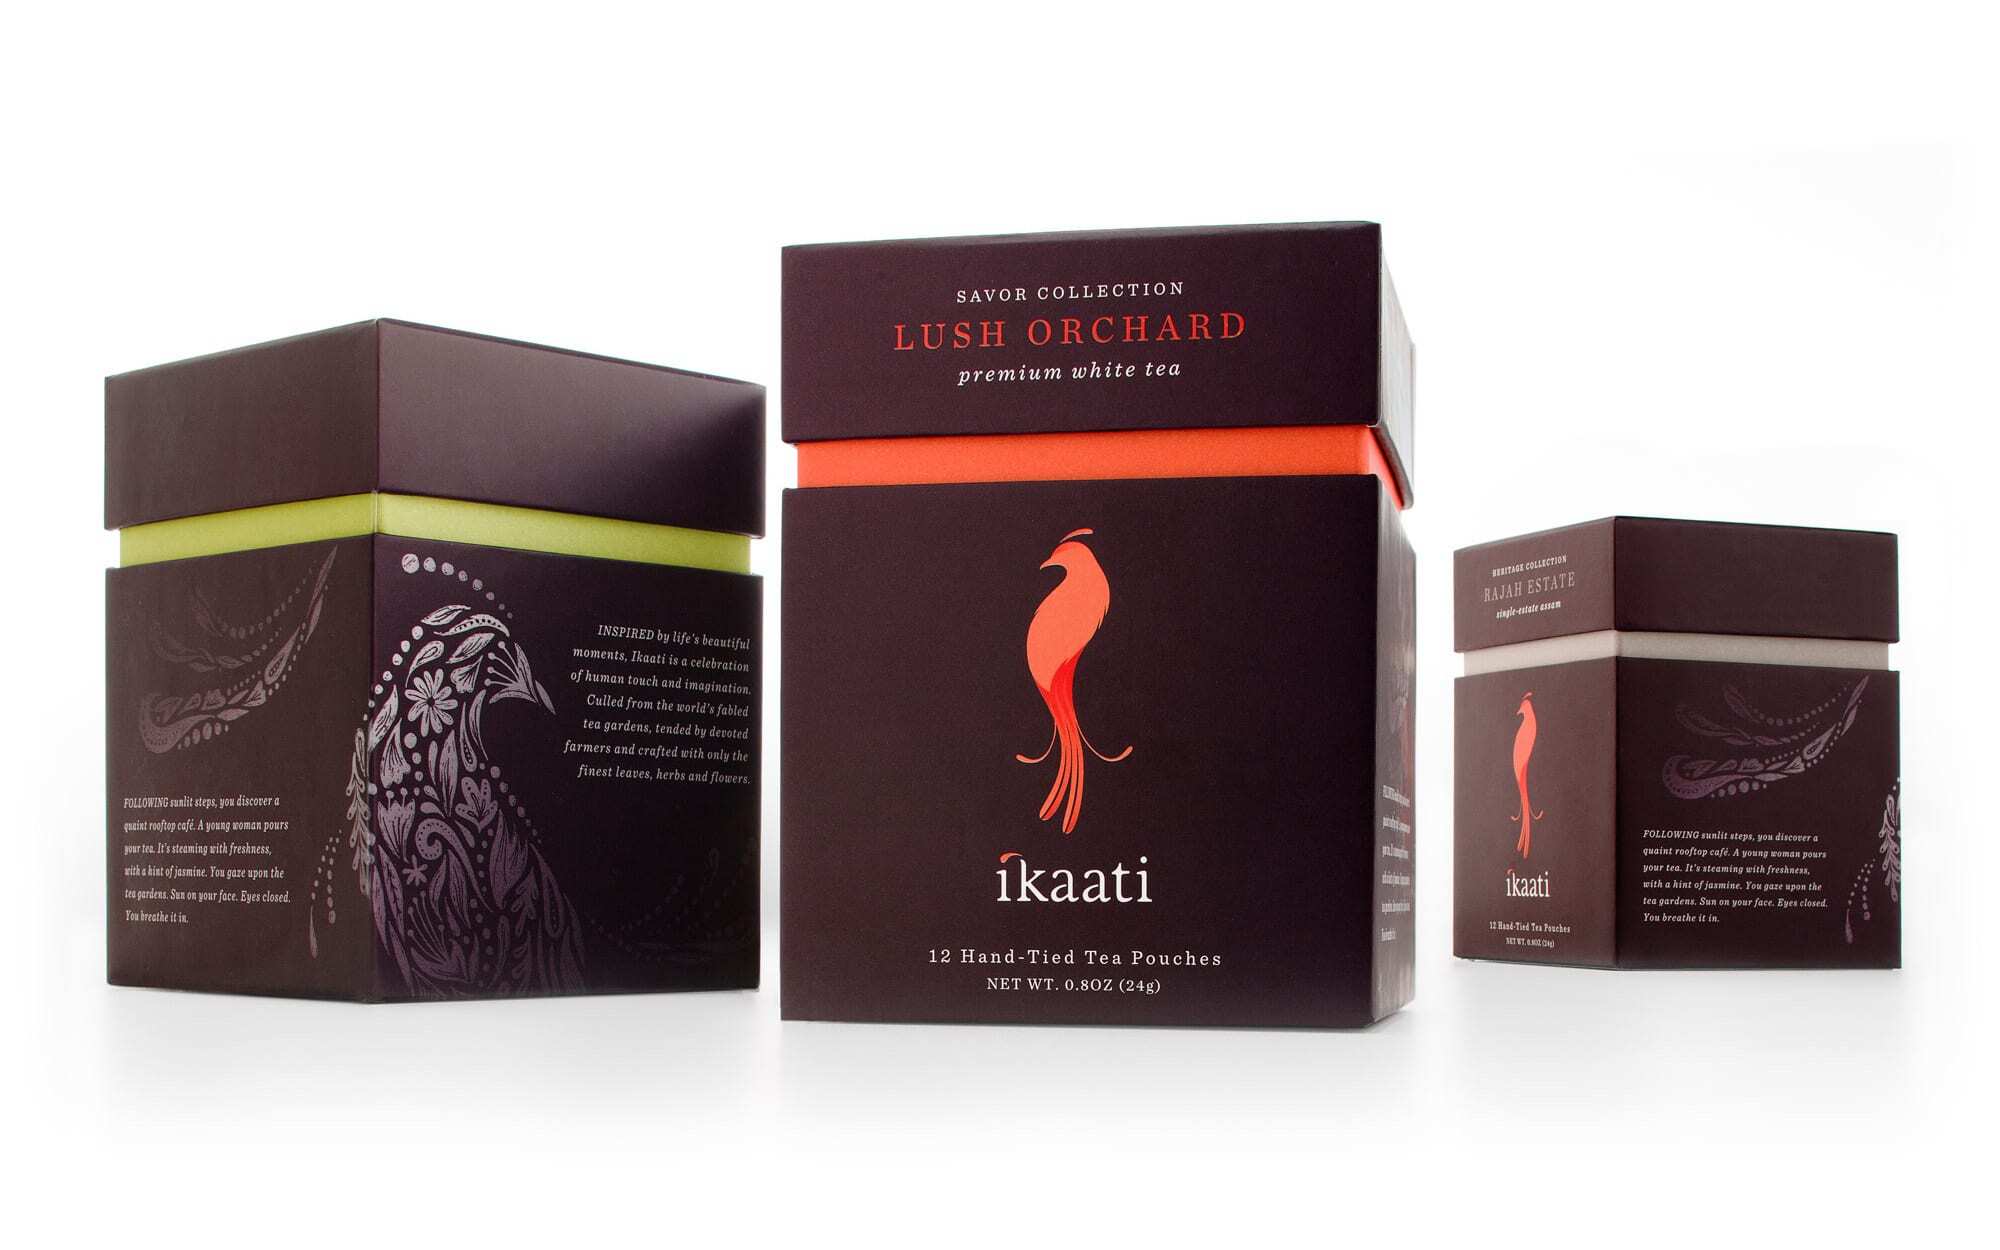 Packaging designed by Studio MPLS for Ikaati tea